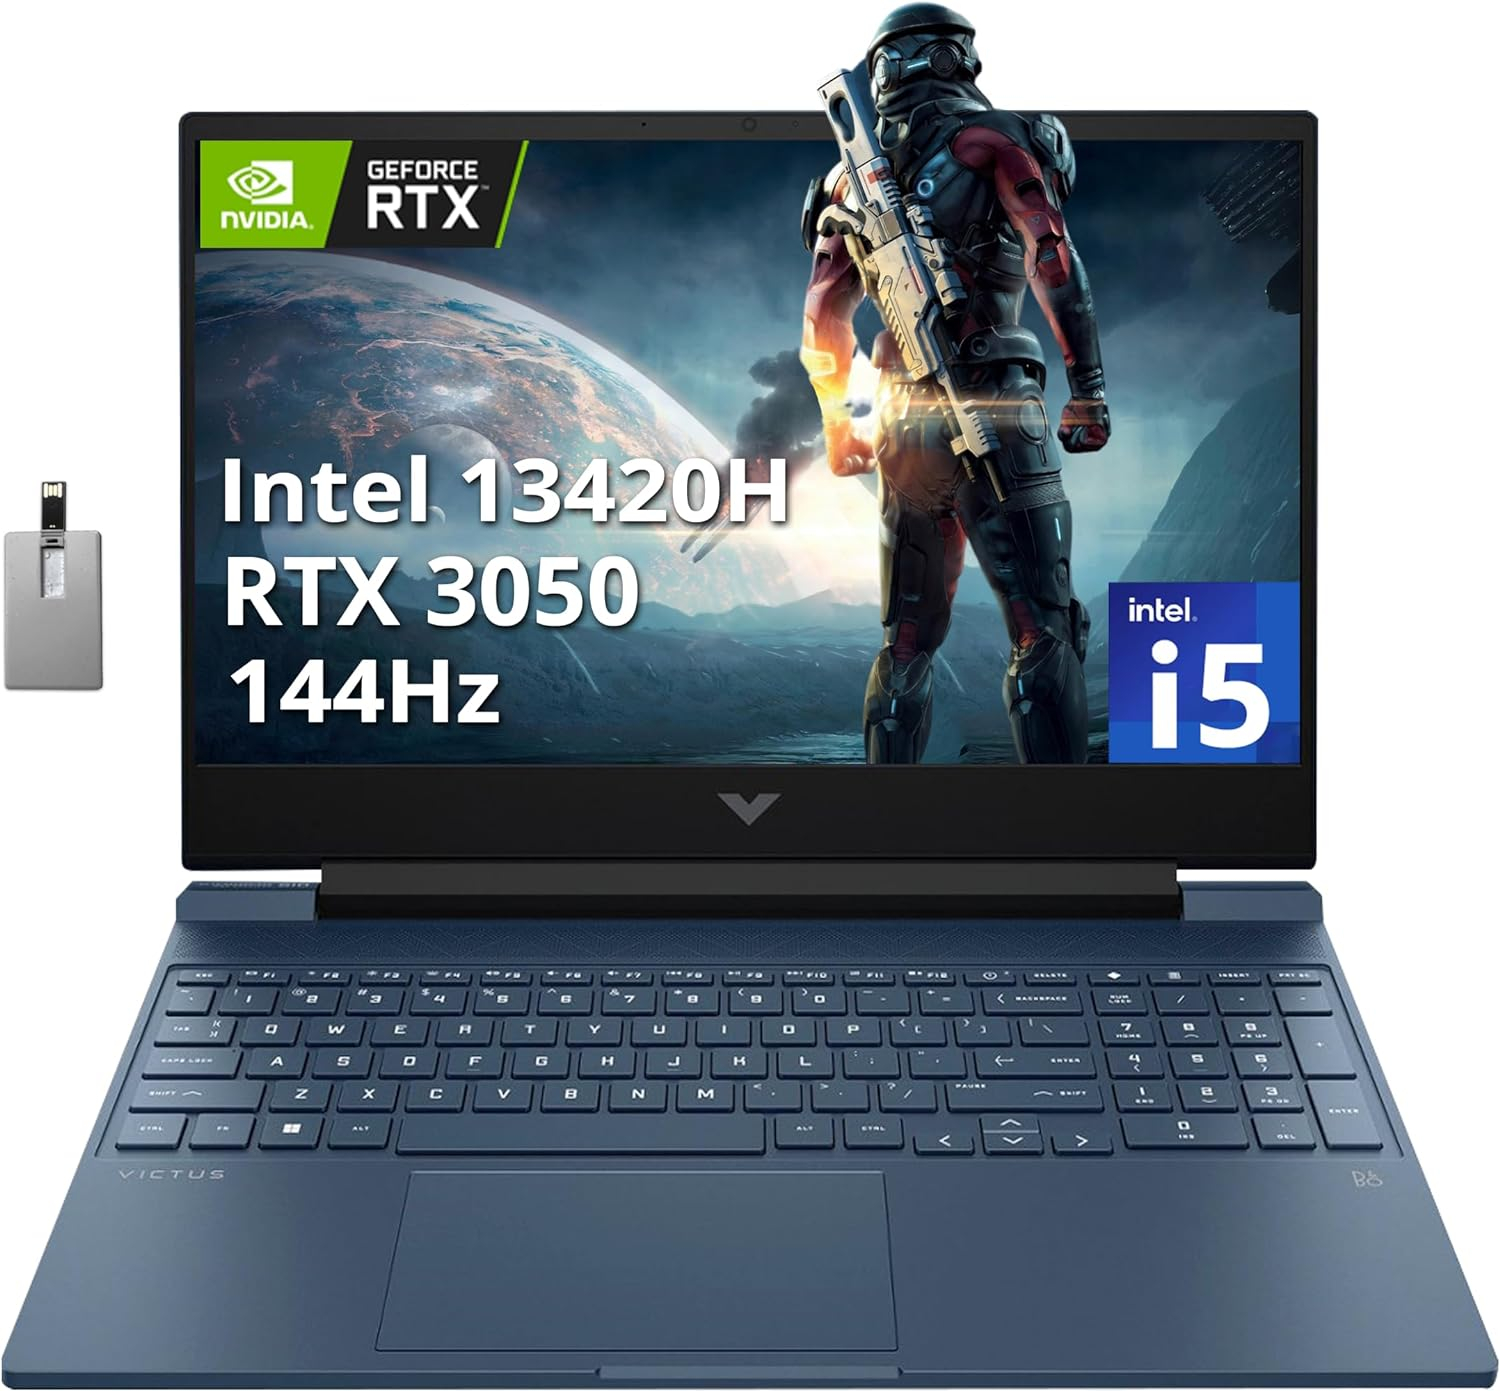 HP Victus Gaming Laptop, 15.6 FHD 144Hz IPS Display, Intel Core i5-13420H, NVIDIA GeForce RTX 3050, 16GB RAM, 1TB PCIe SSD, Backlit Keyboard, Wi-Fi 6, HD Camera, Win 11 Pro, Blue, 32GB USB Card